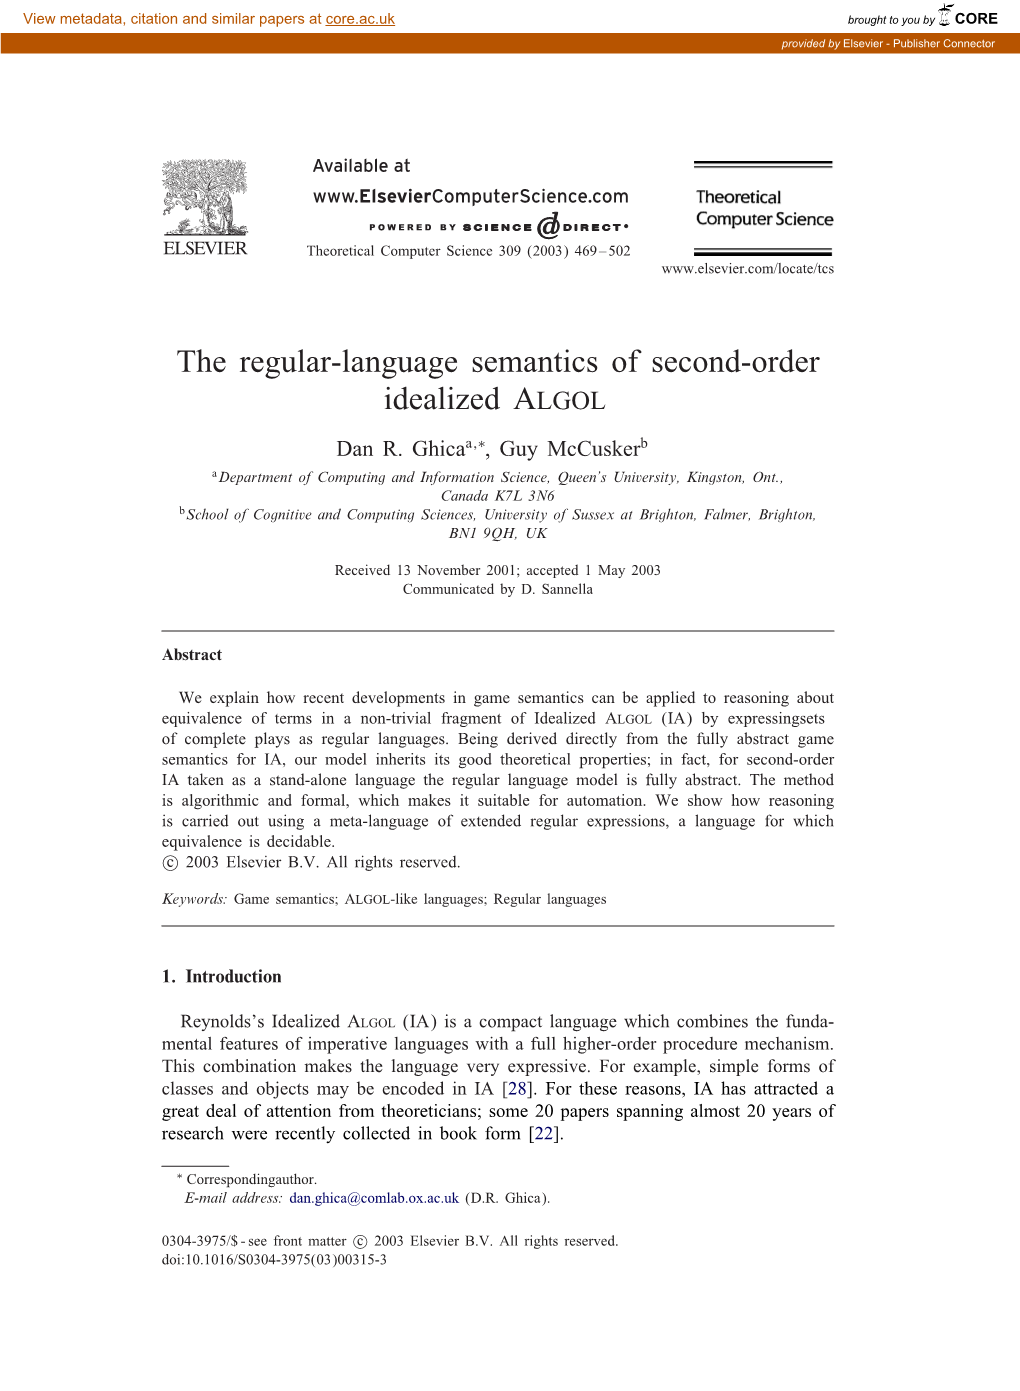 The Regular-Language Semantics of Second-Order Idealized ALGOL